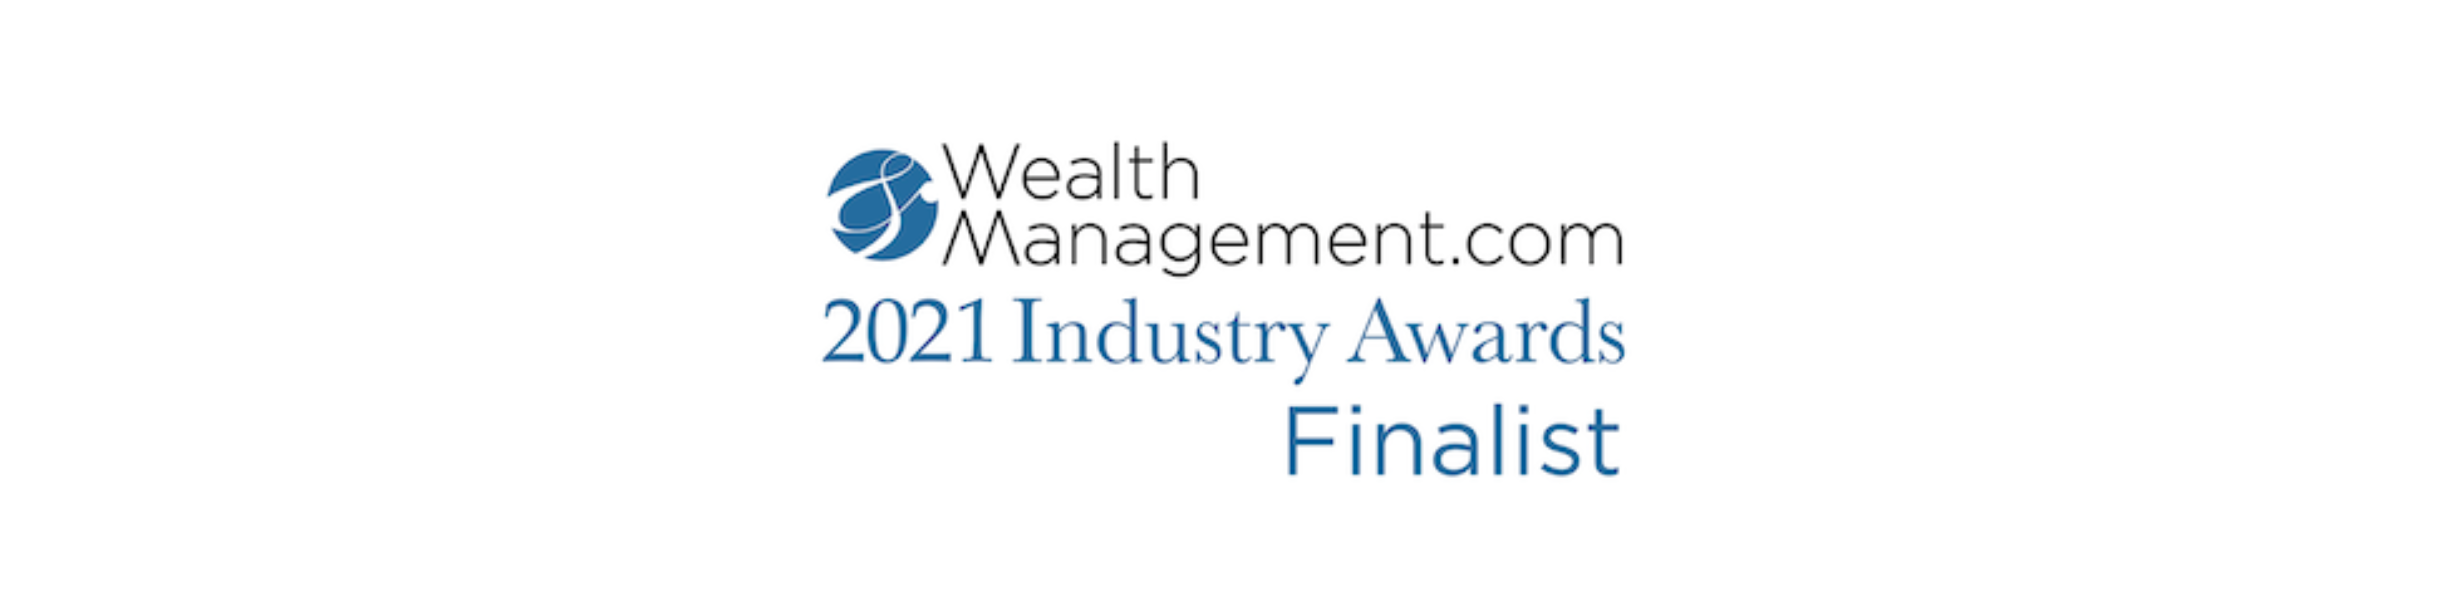 2021 WealthManagement.com Industry Awards Finalist Three Crowns Marketing